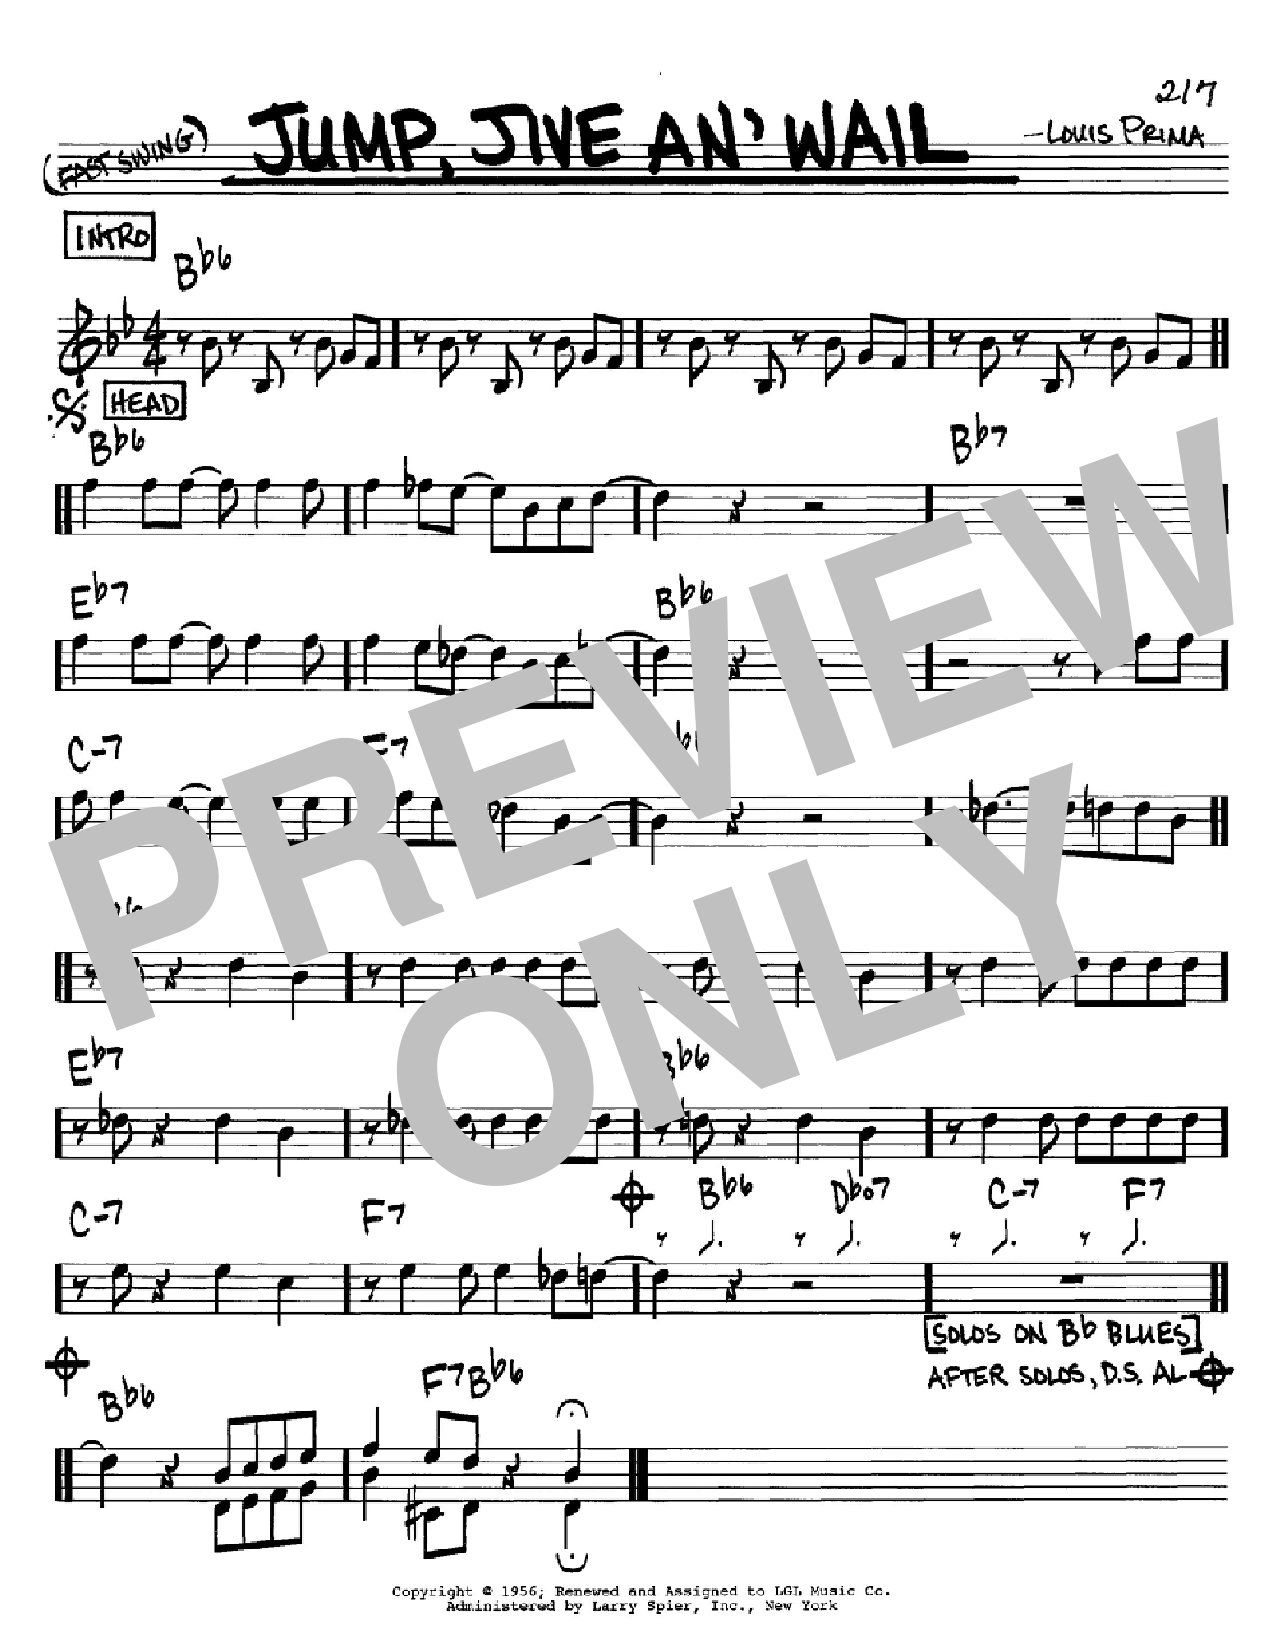 Louis Prima Jump, Jive An' Wail Sheet Music Notes & Chords for Tenor Saxophone - Download or Print PDF